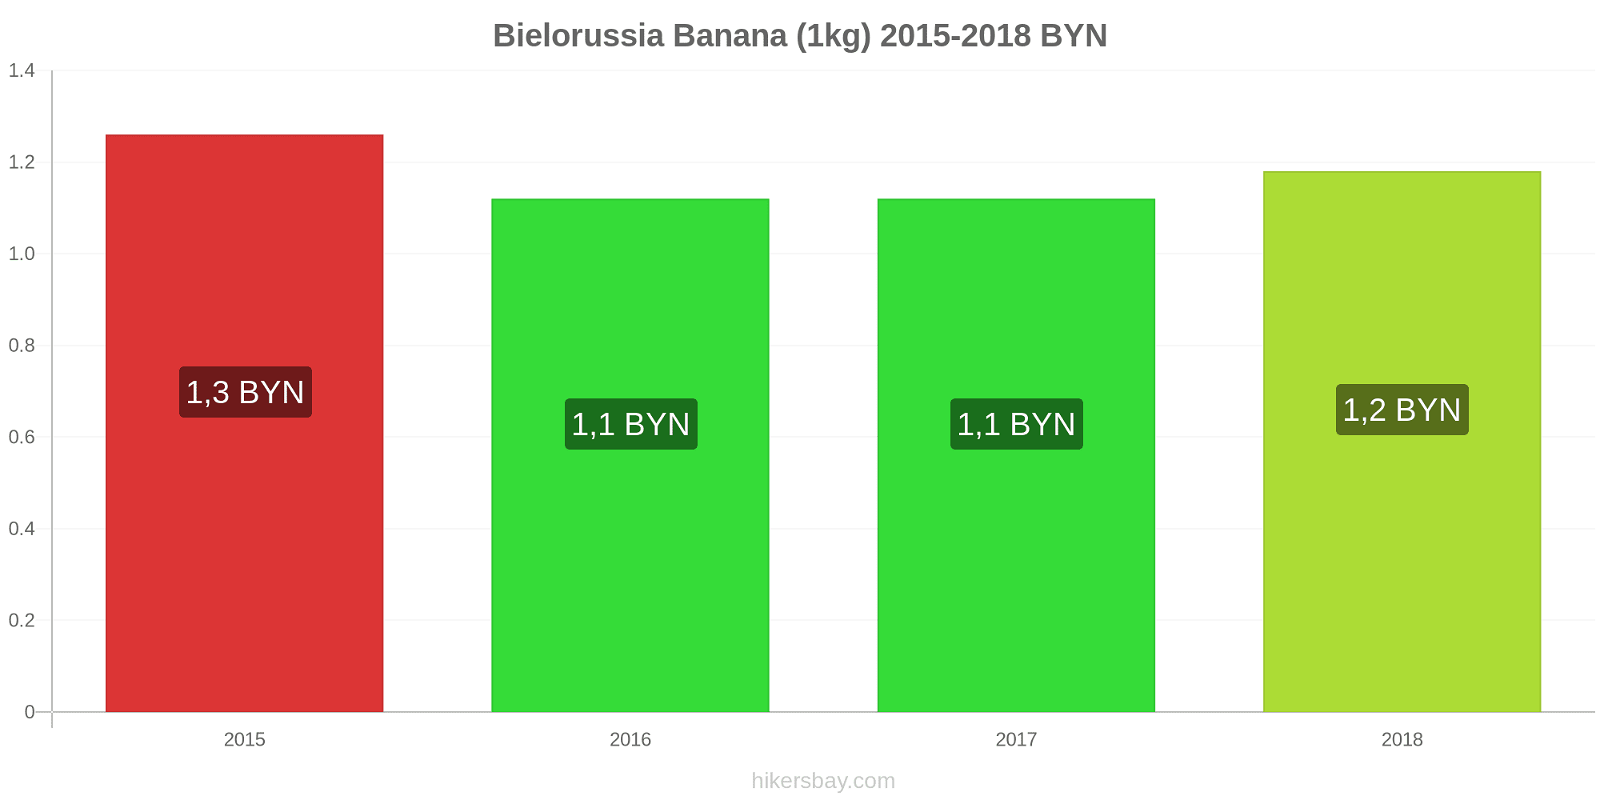 Bielorussia cambi di prezzo Banane (1kg) hikersbay.com